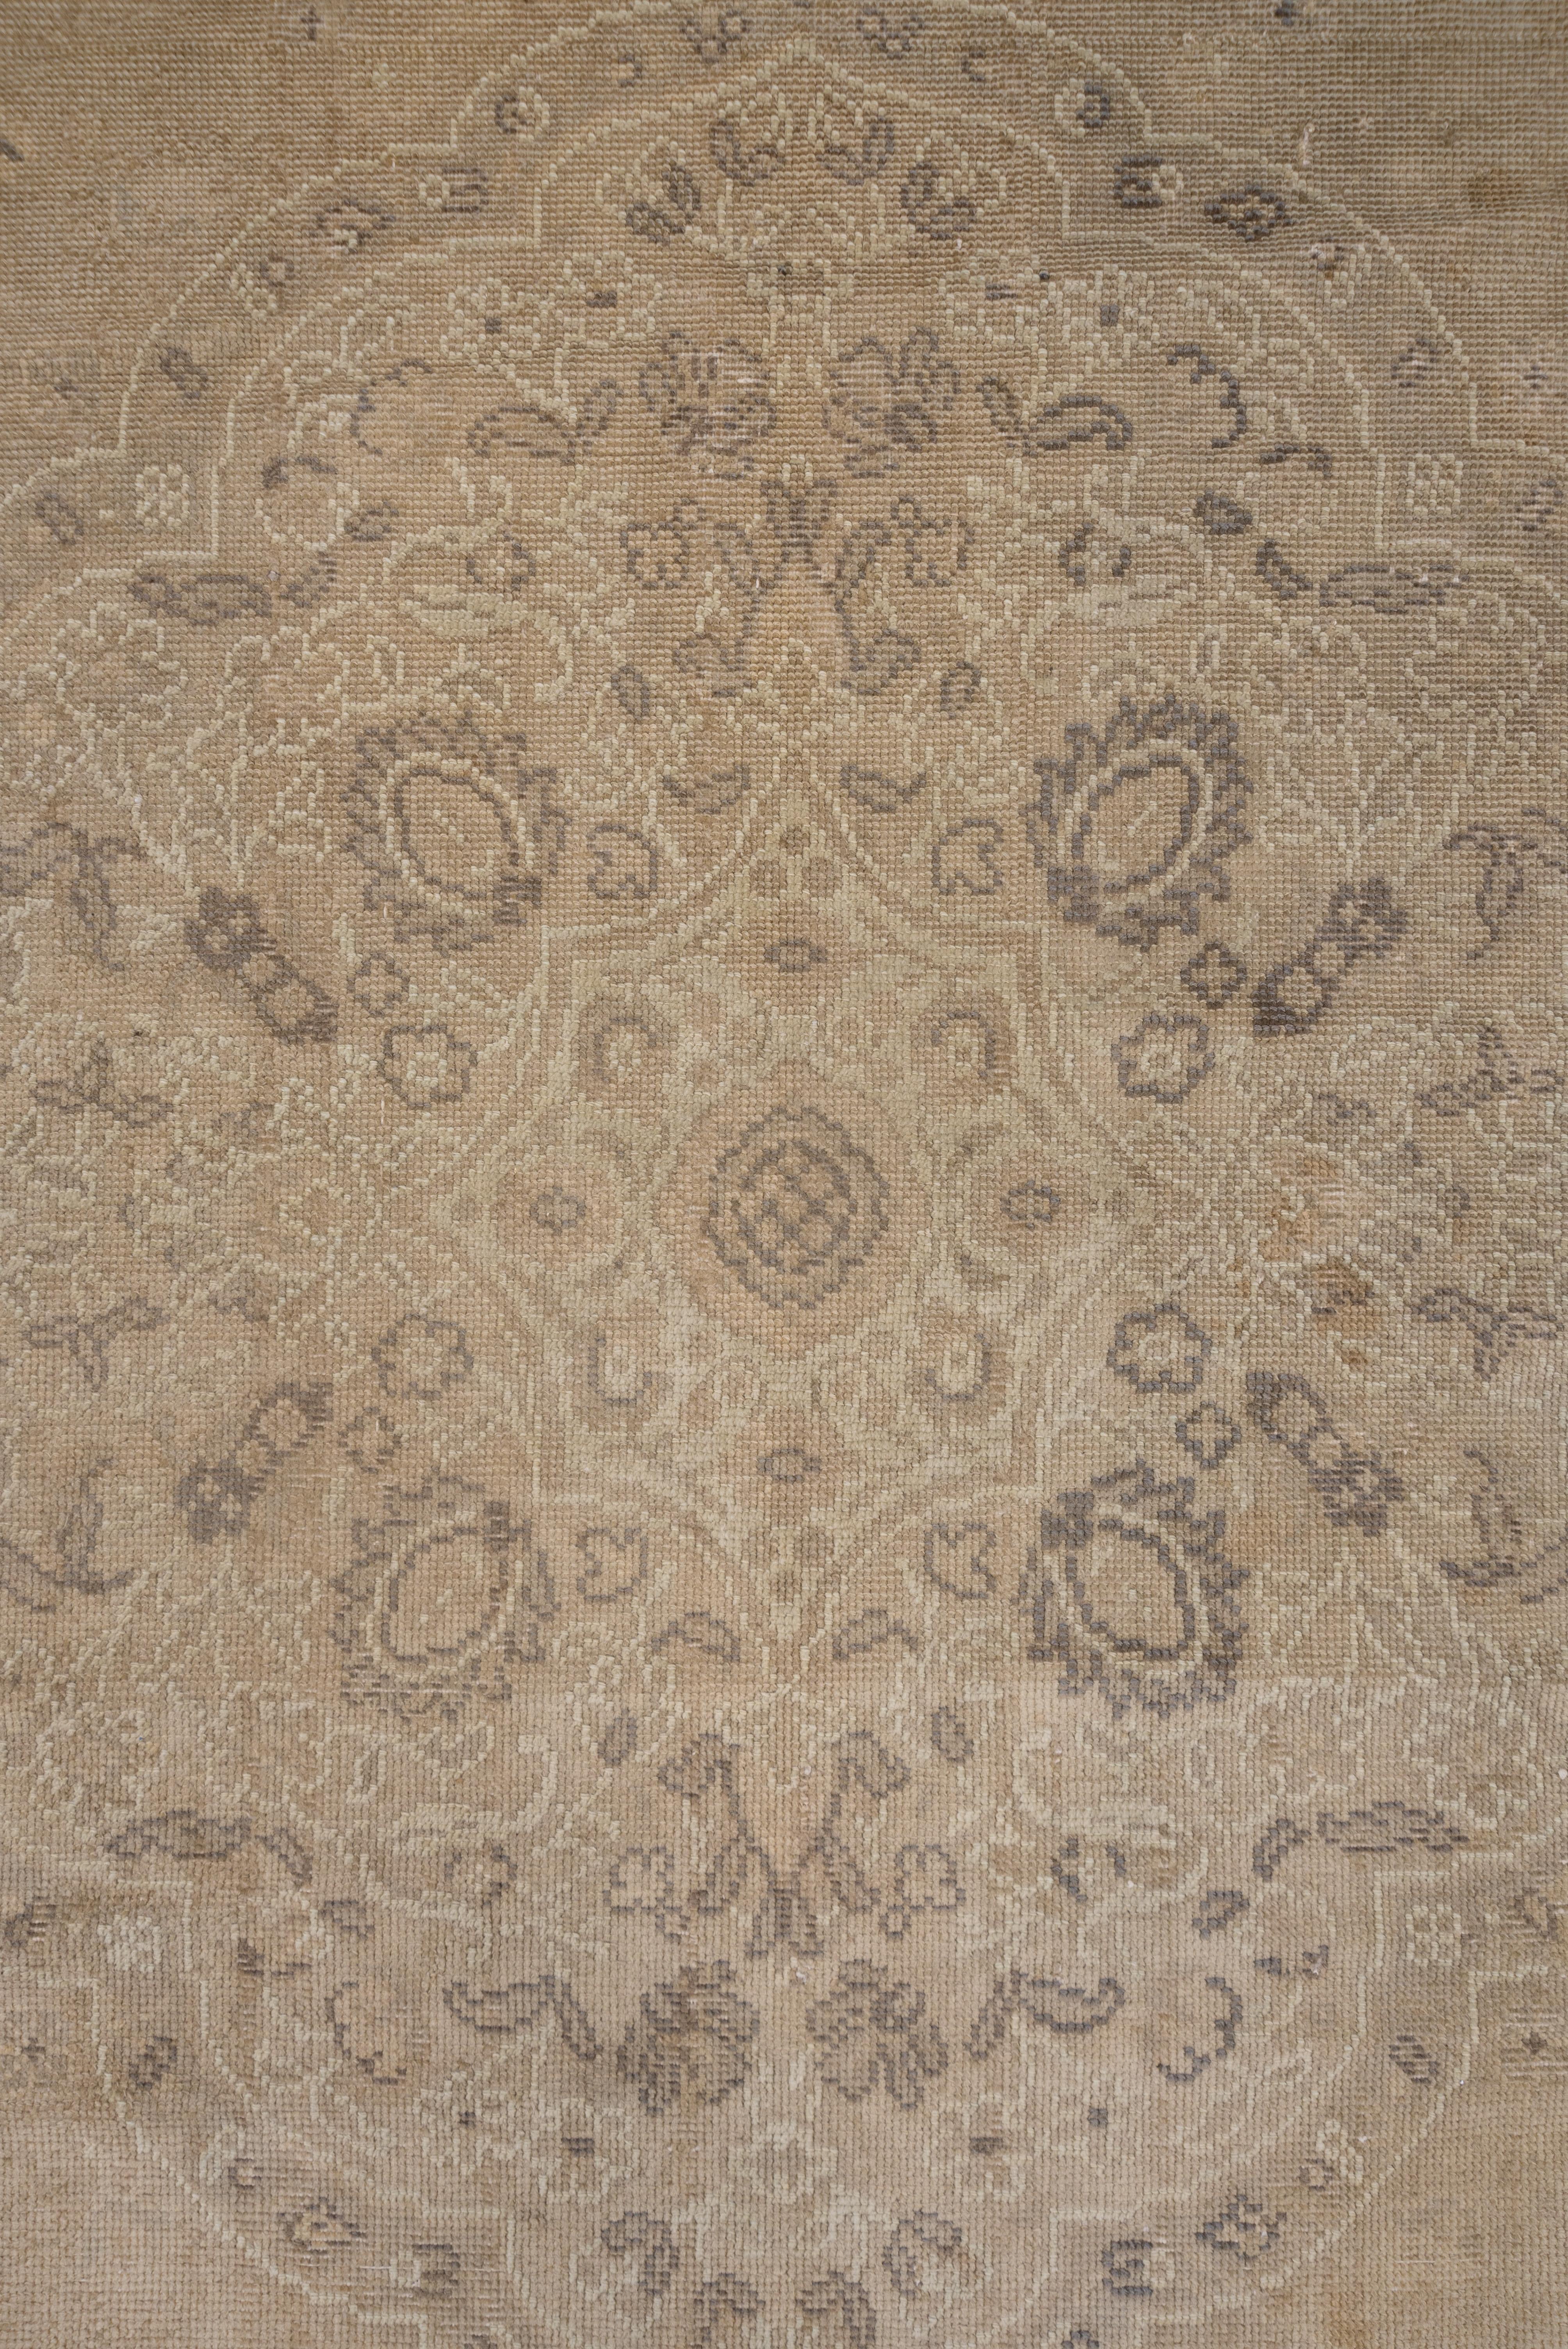 Early 20th Century Antique Turkish Sivas Large Carpet, Neutral Palette, circa 1920s